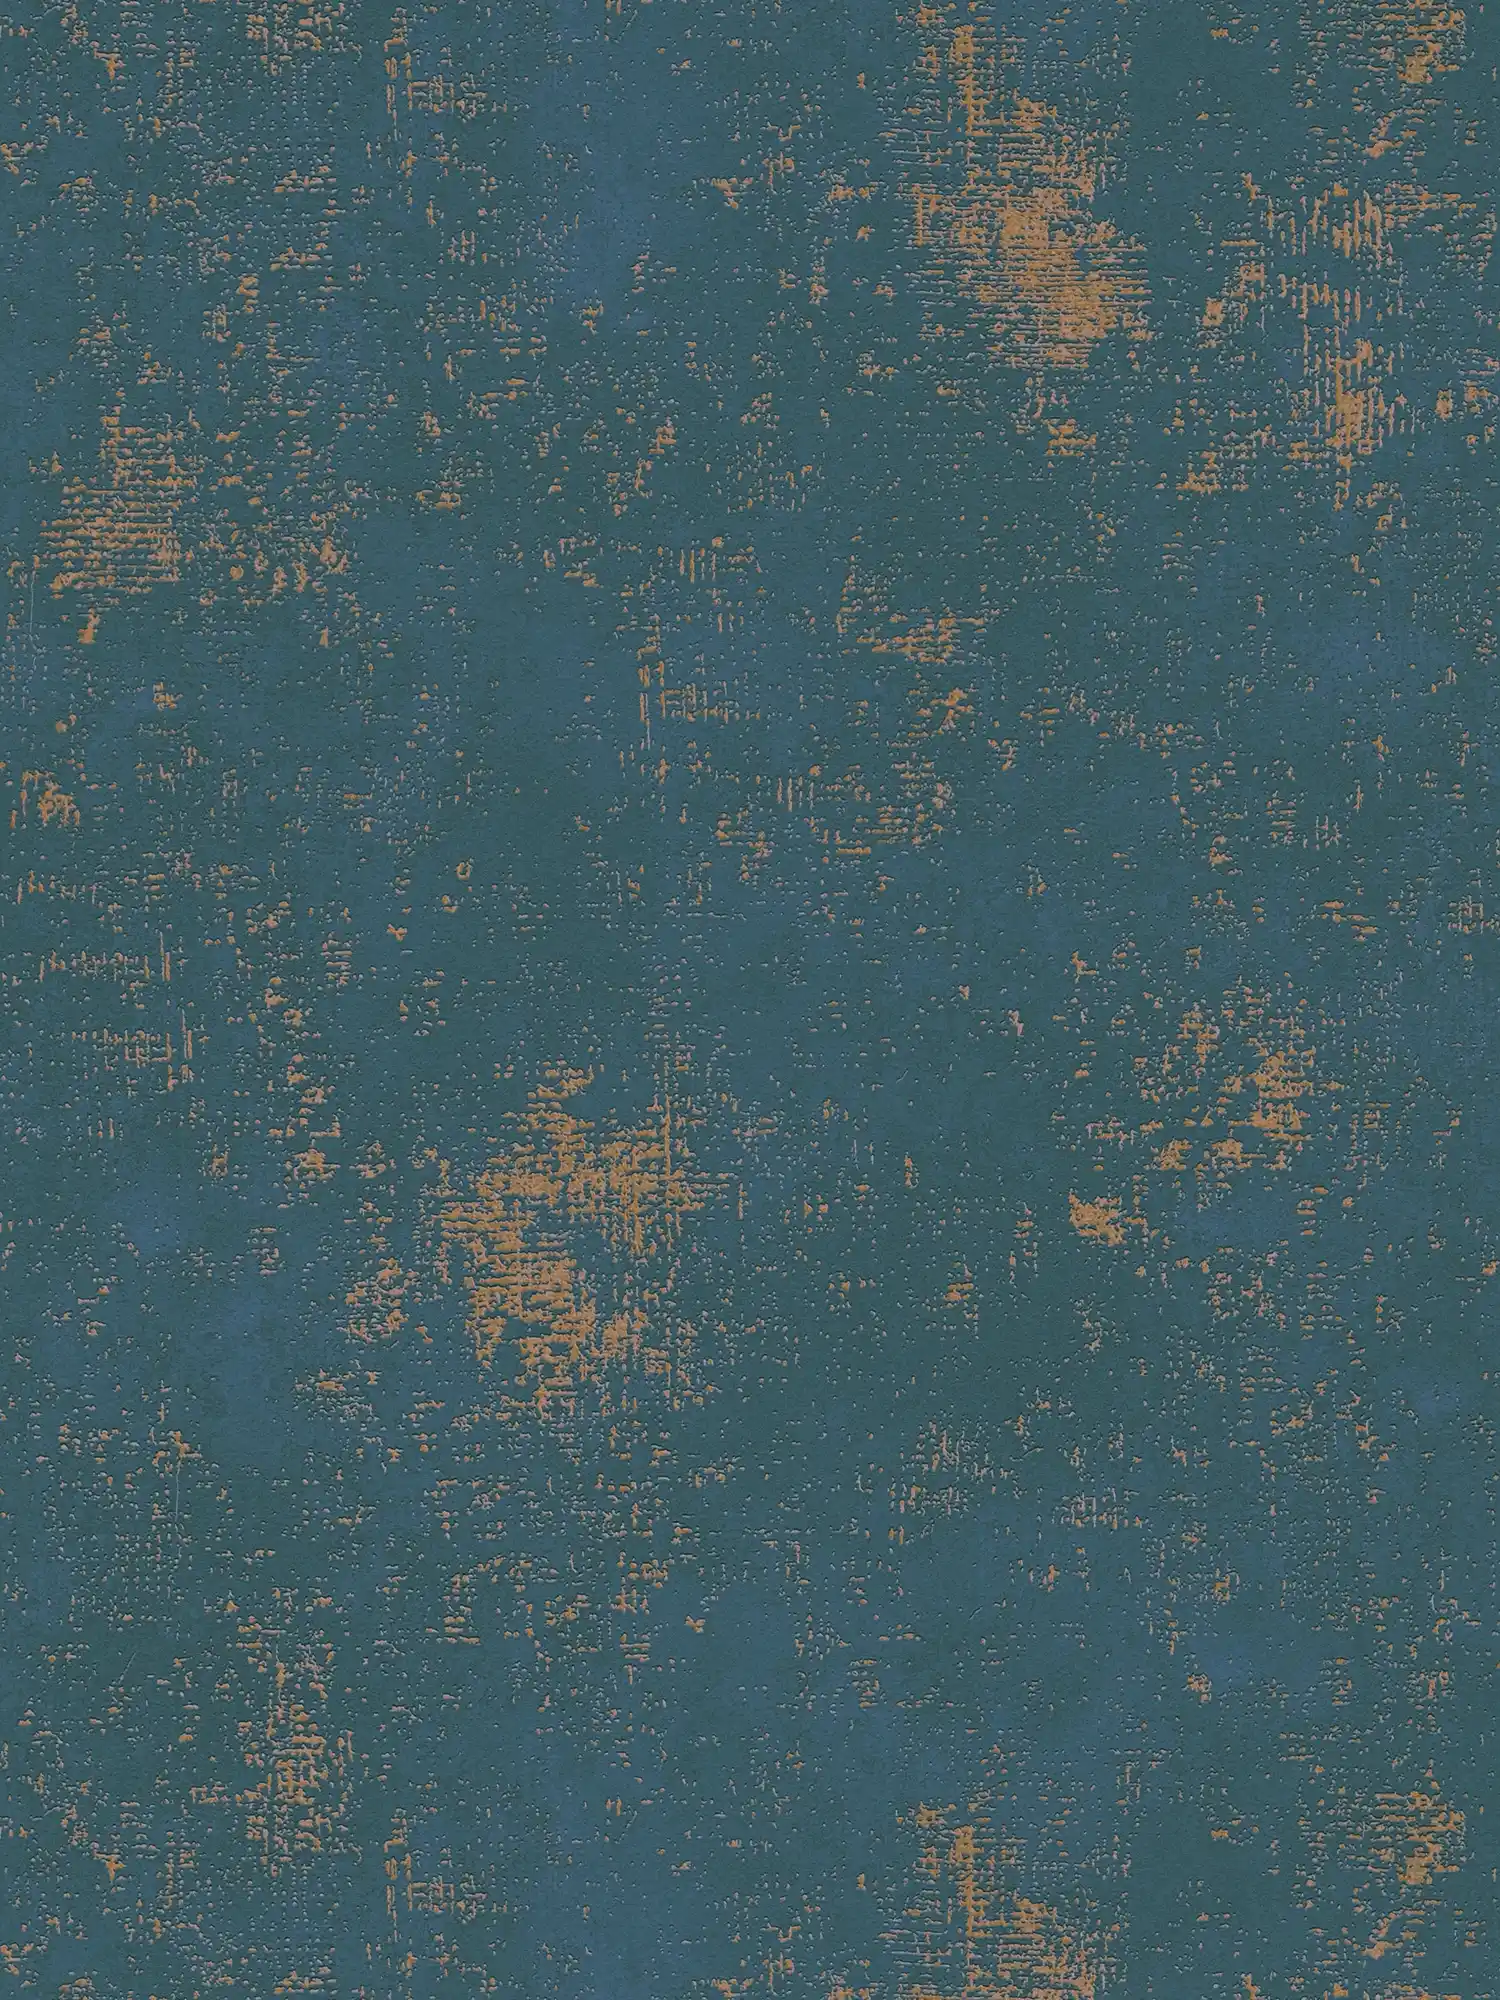 Carta da parati blu con accenti metallici dorati e dettagli di texture
